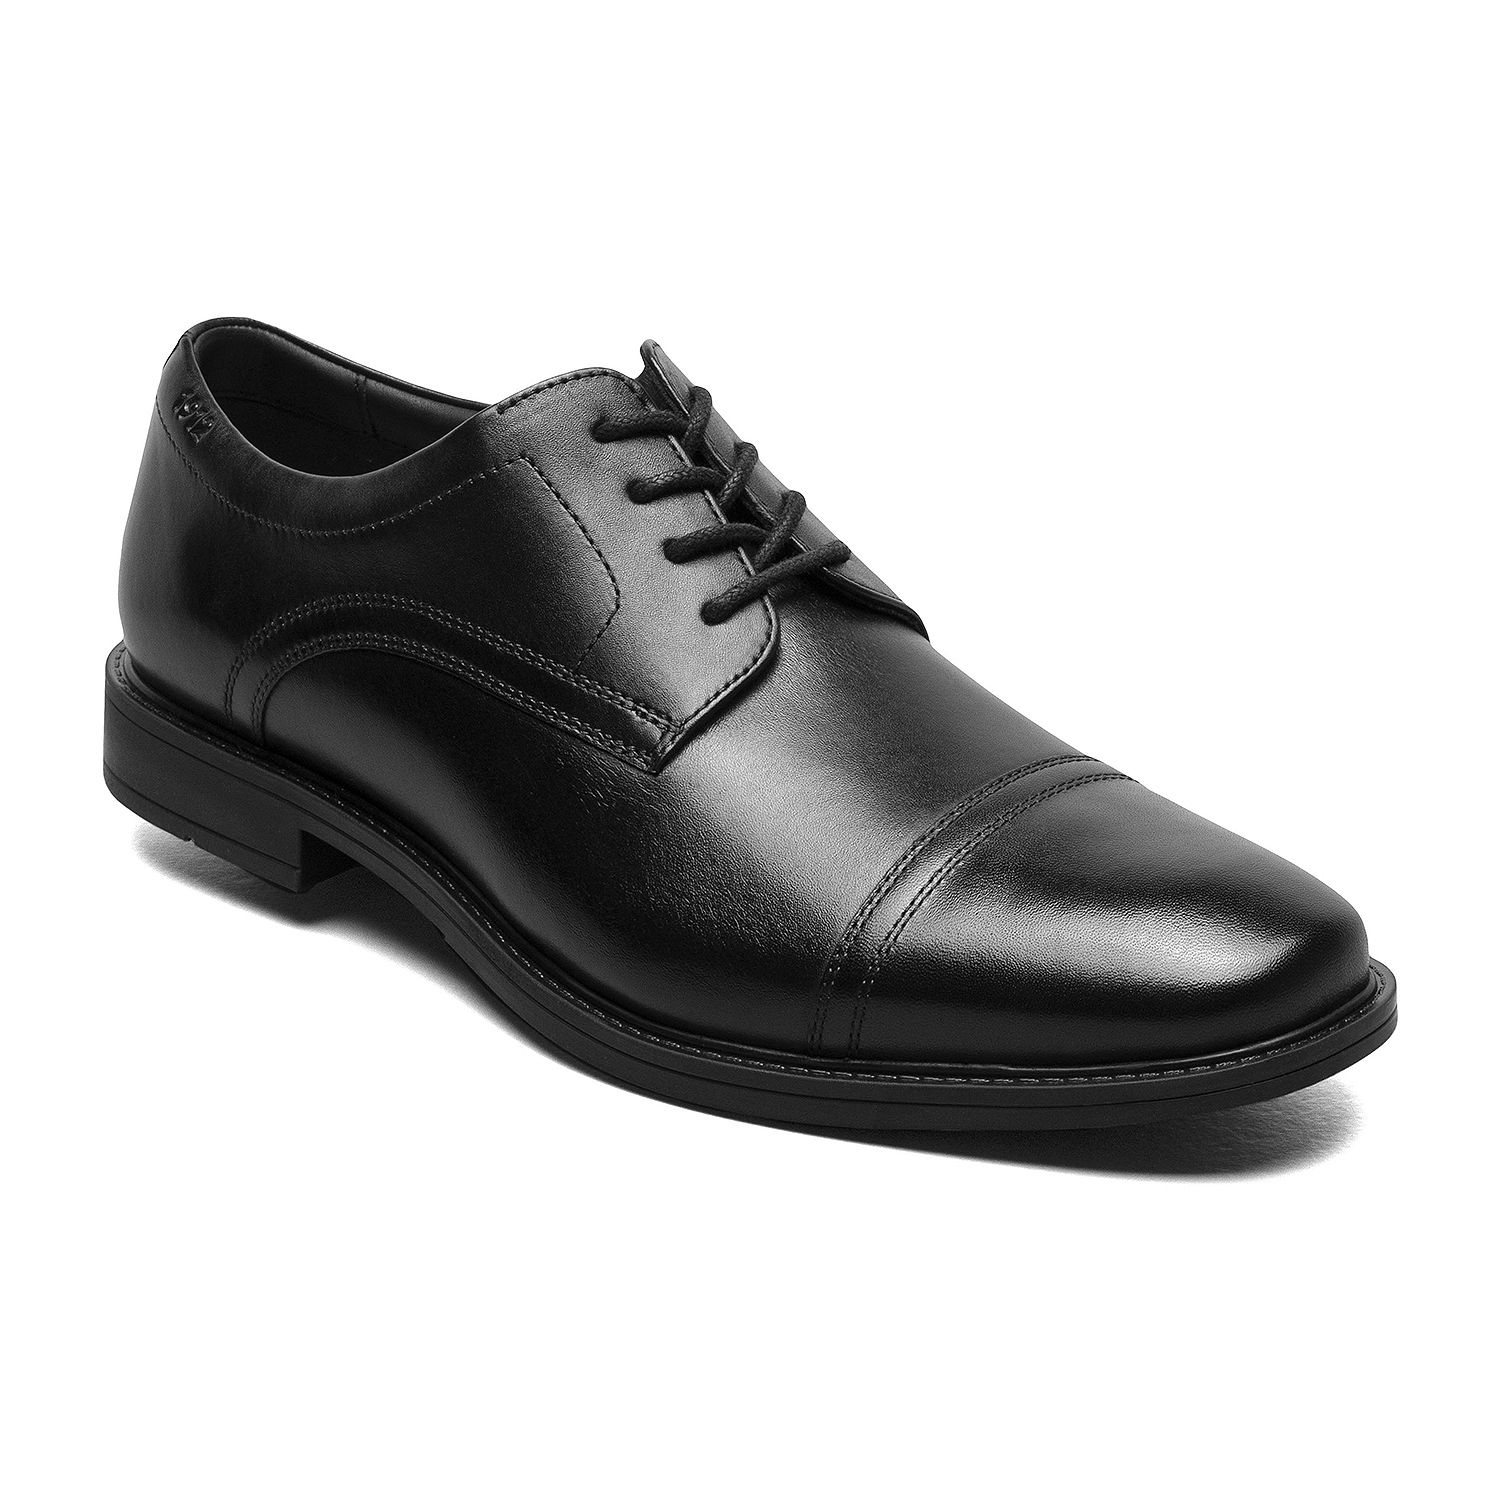 Nunn Bush Mens Baxter Cap Toe Oxford Oxford Shoes - JCPenney